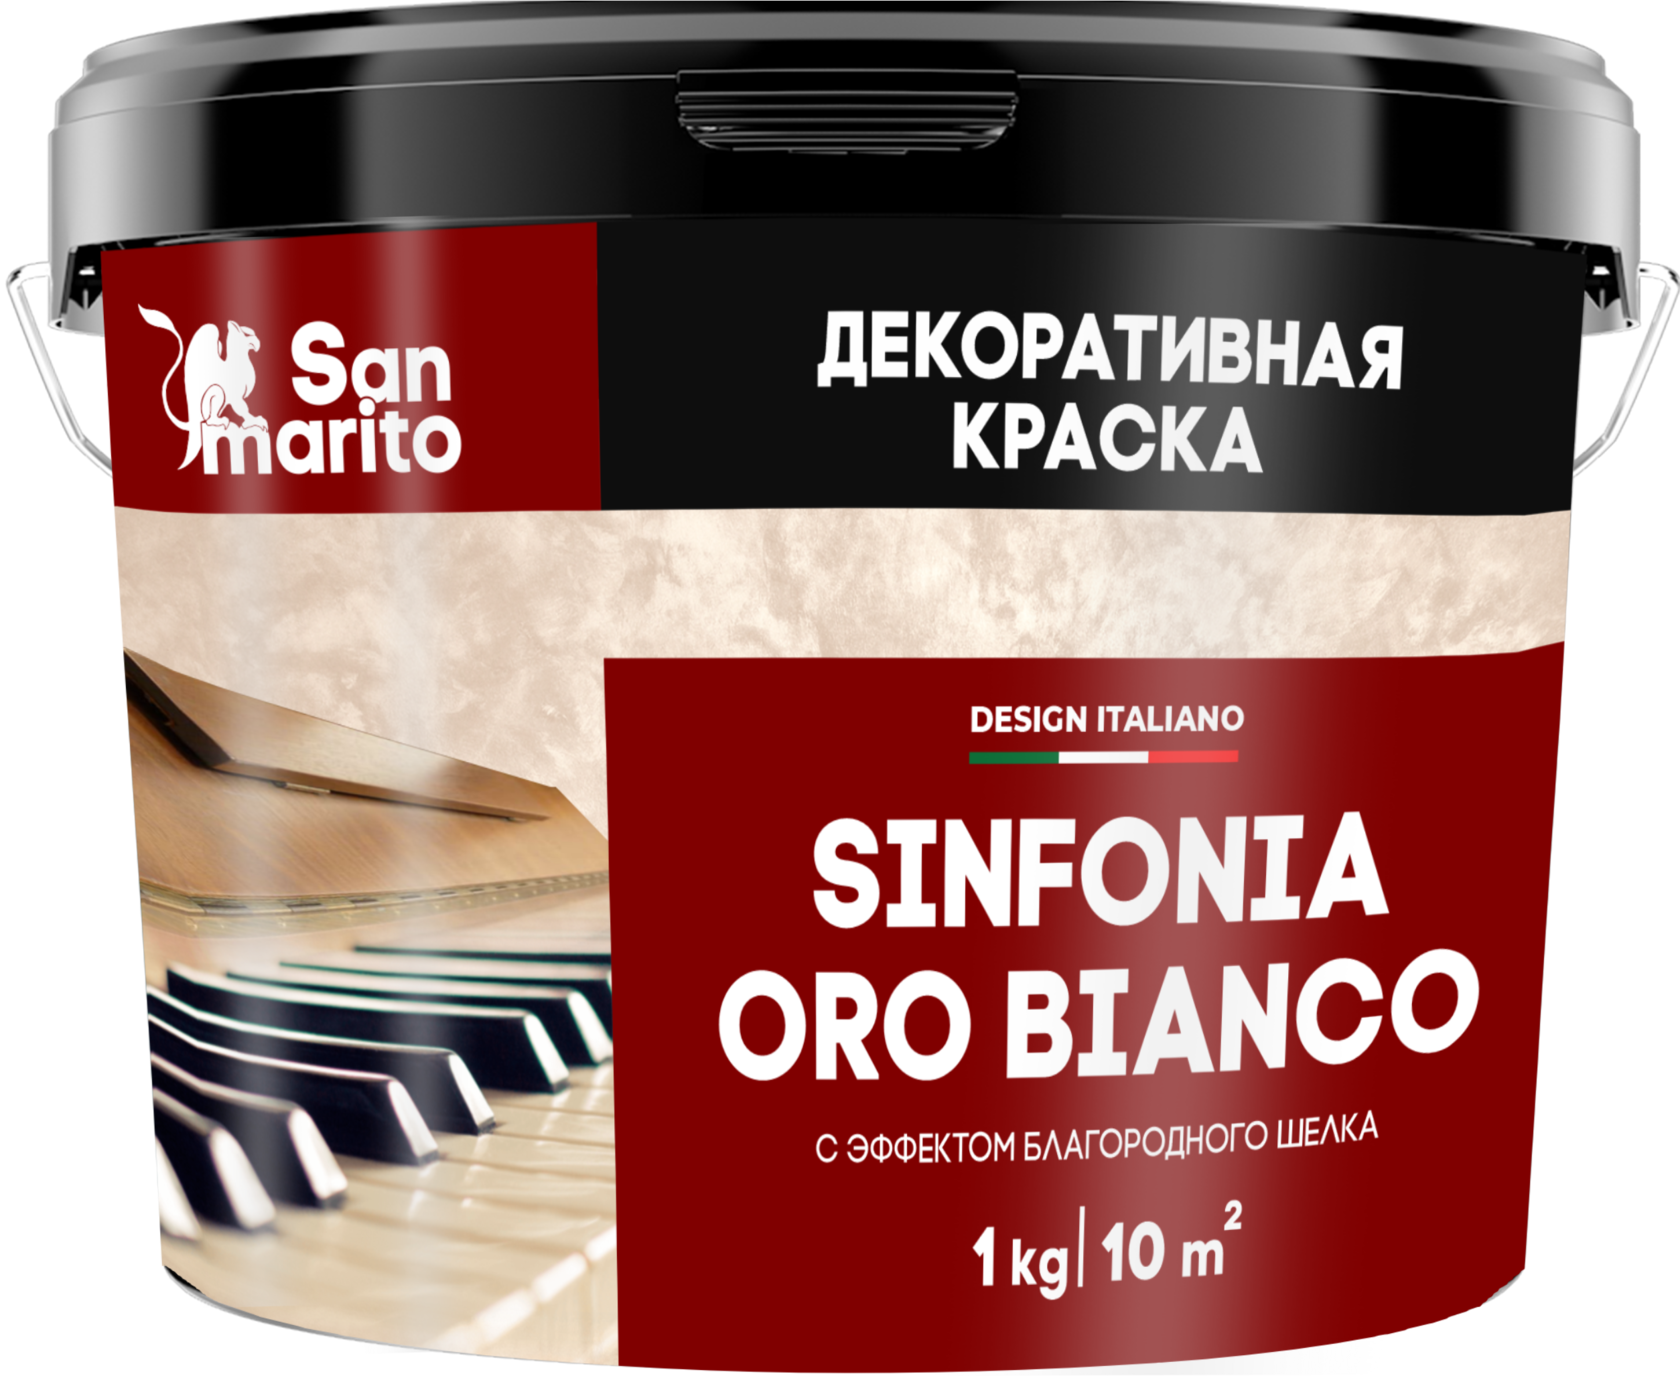 Краска декоративная с эффектом благородного шелка "San Marito Sinfonia Oro Bianco" 5 кг